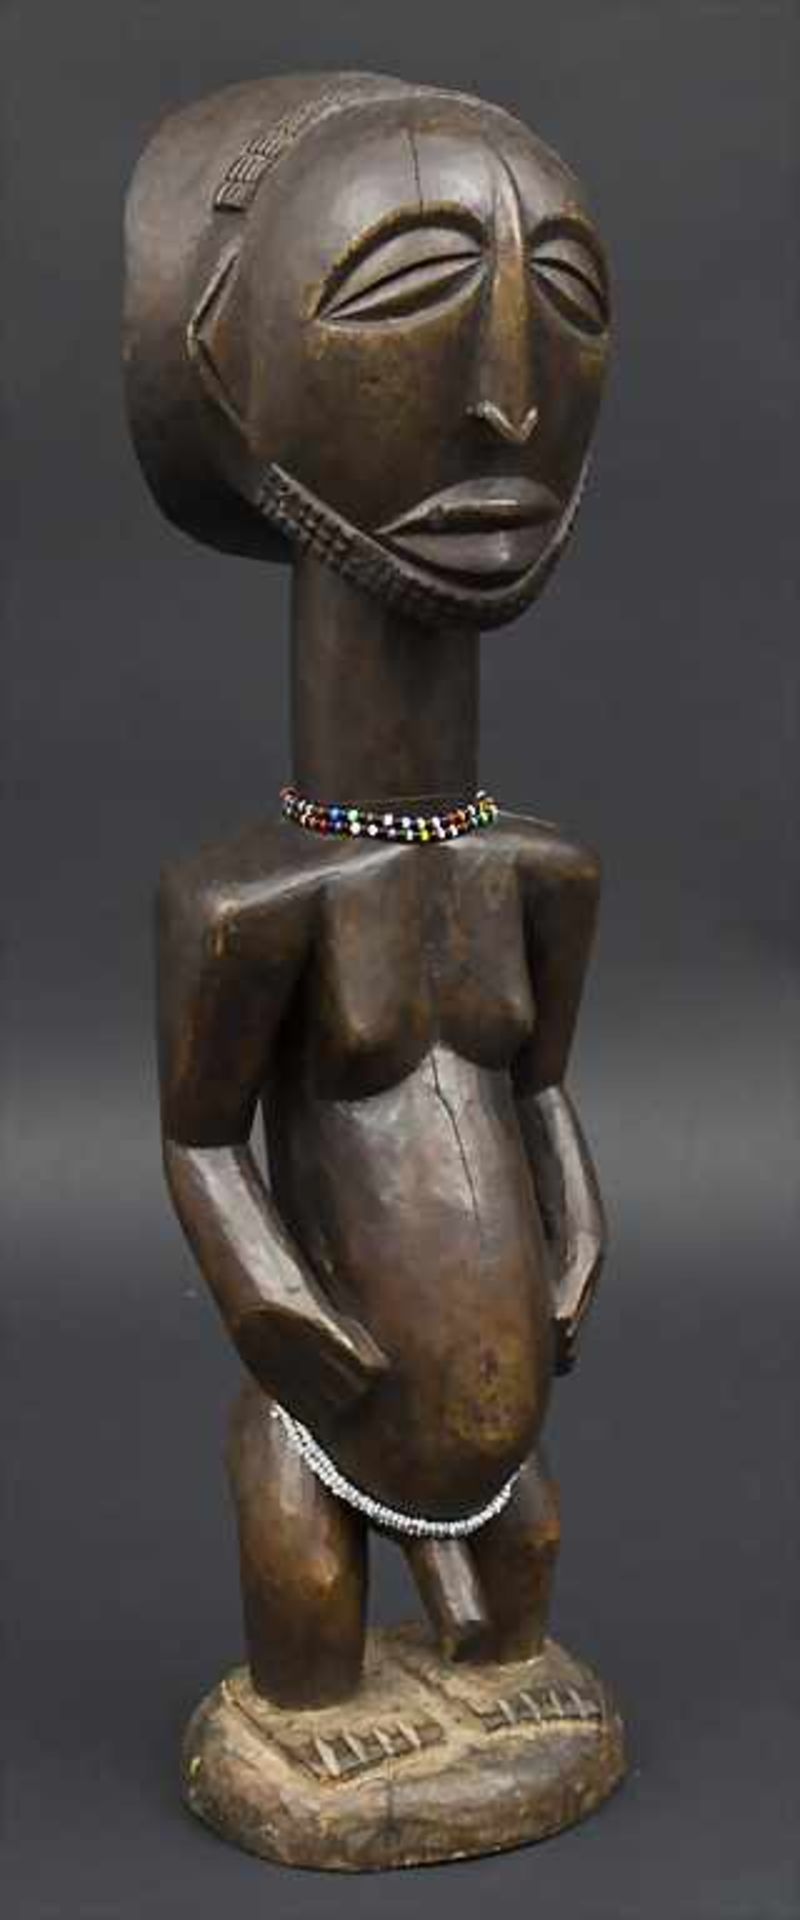 Männliche Ahnenfigur, Hemba/Kongo / An ancestors male figure Material: Holz, braun patiniert, mit